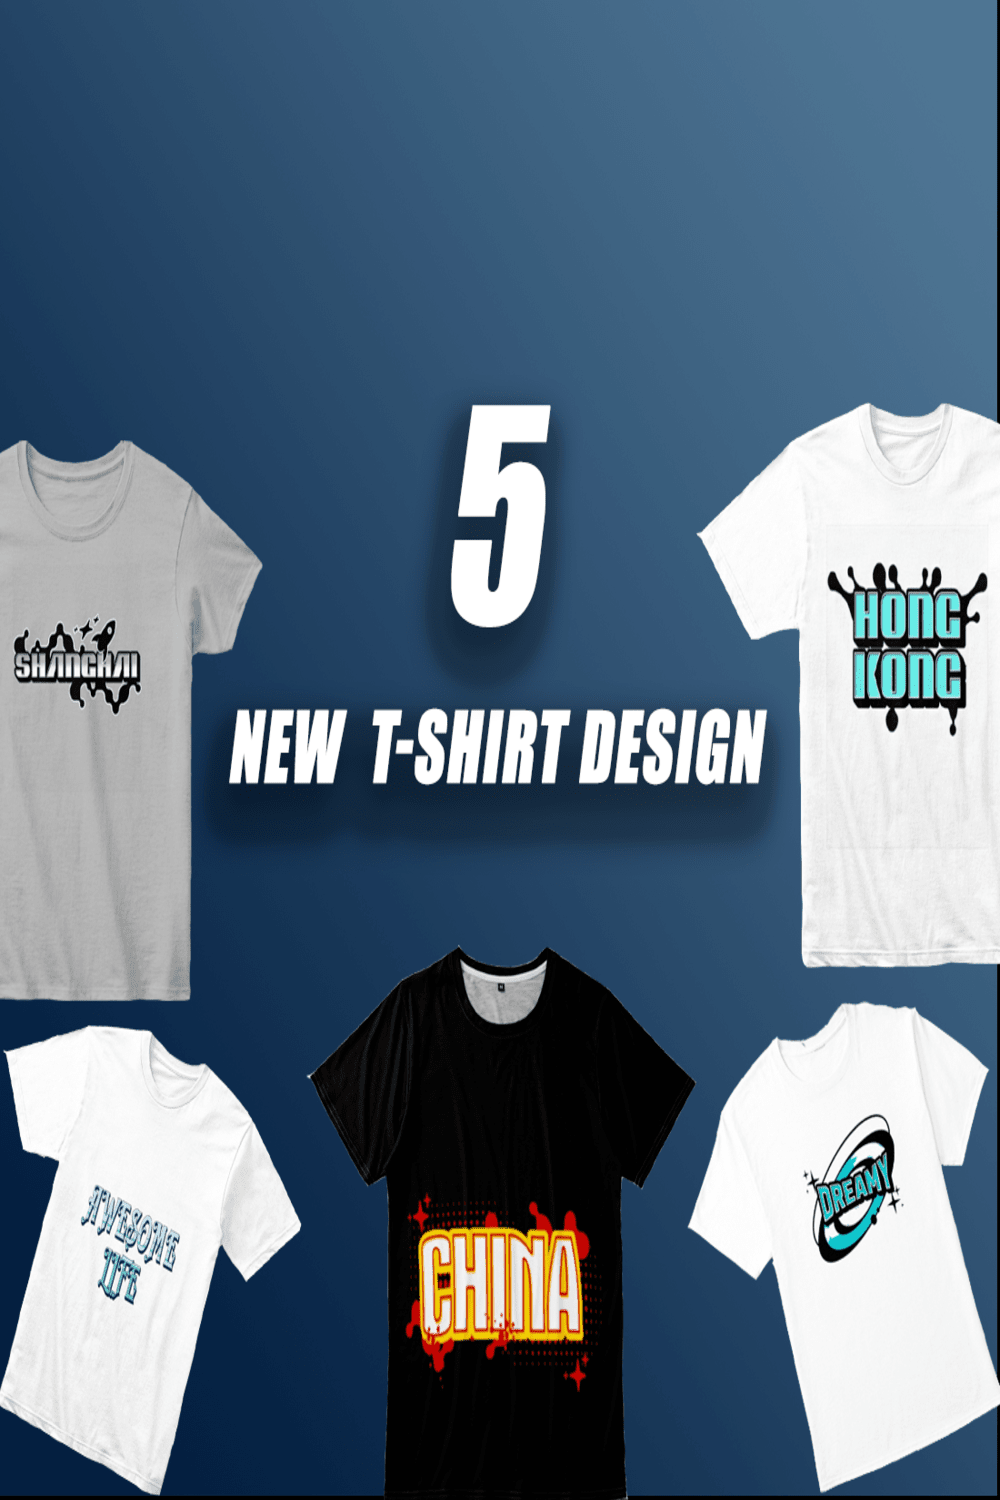 5 New T-shirt Design Pinterest image.